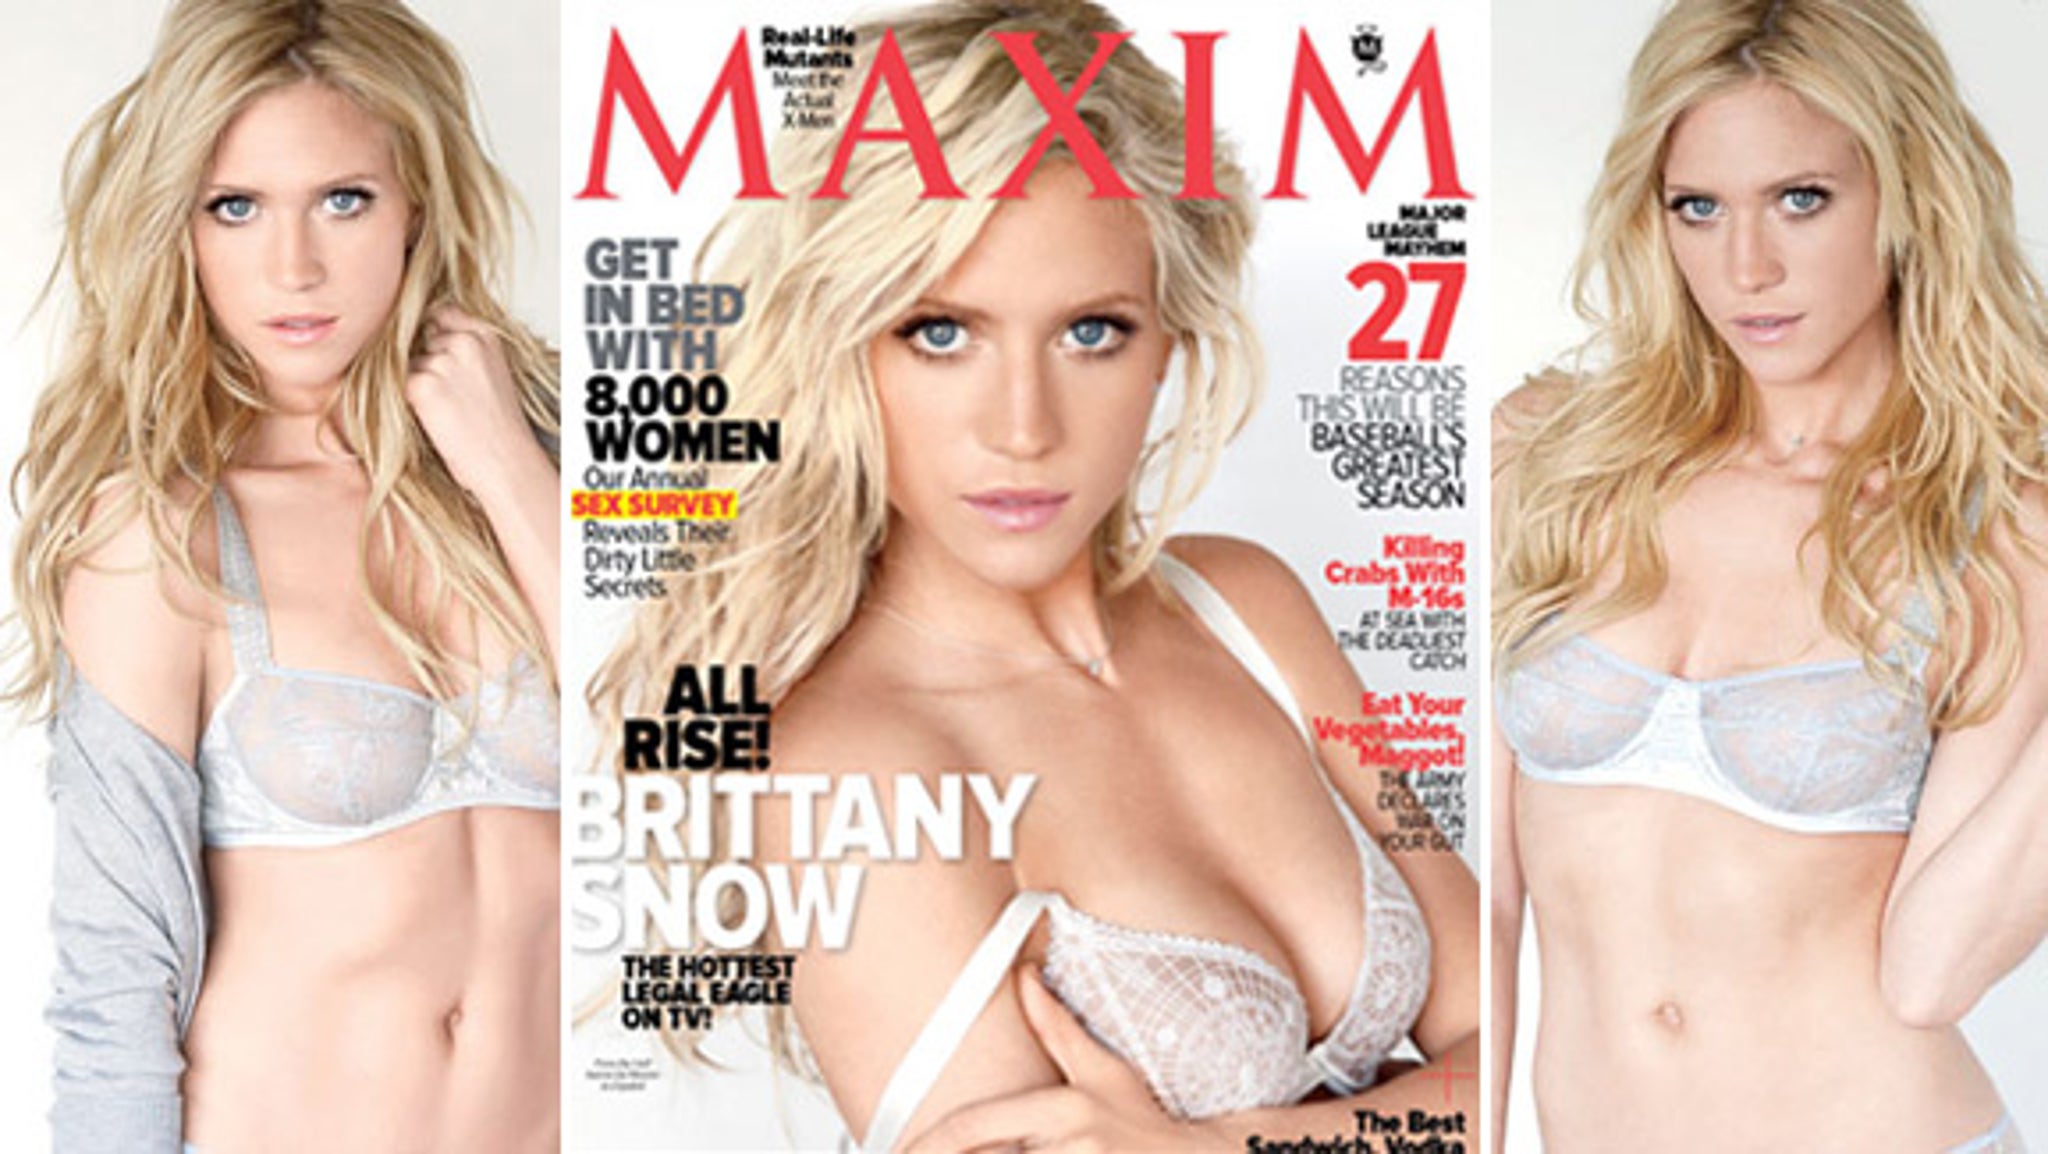 EYE CANDY: Brittany Snow's Hot Body in Maxim.